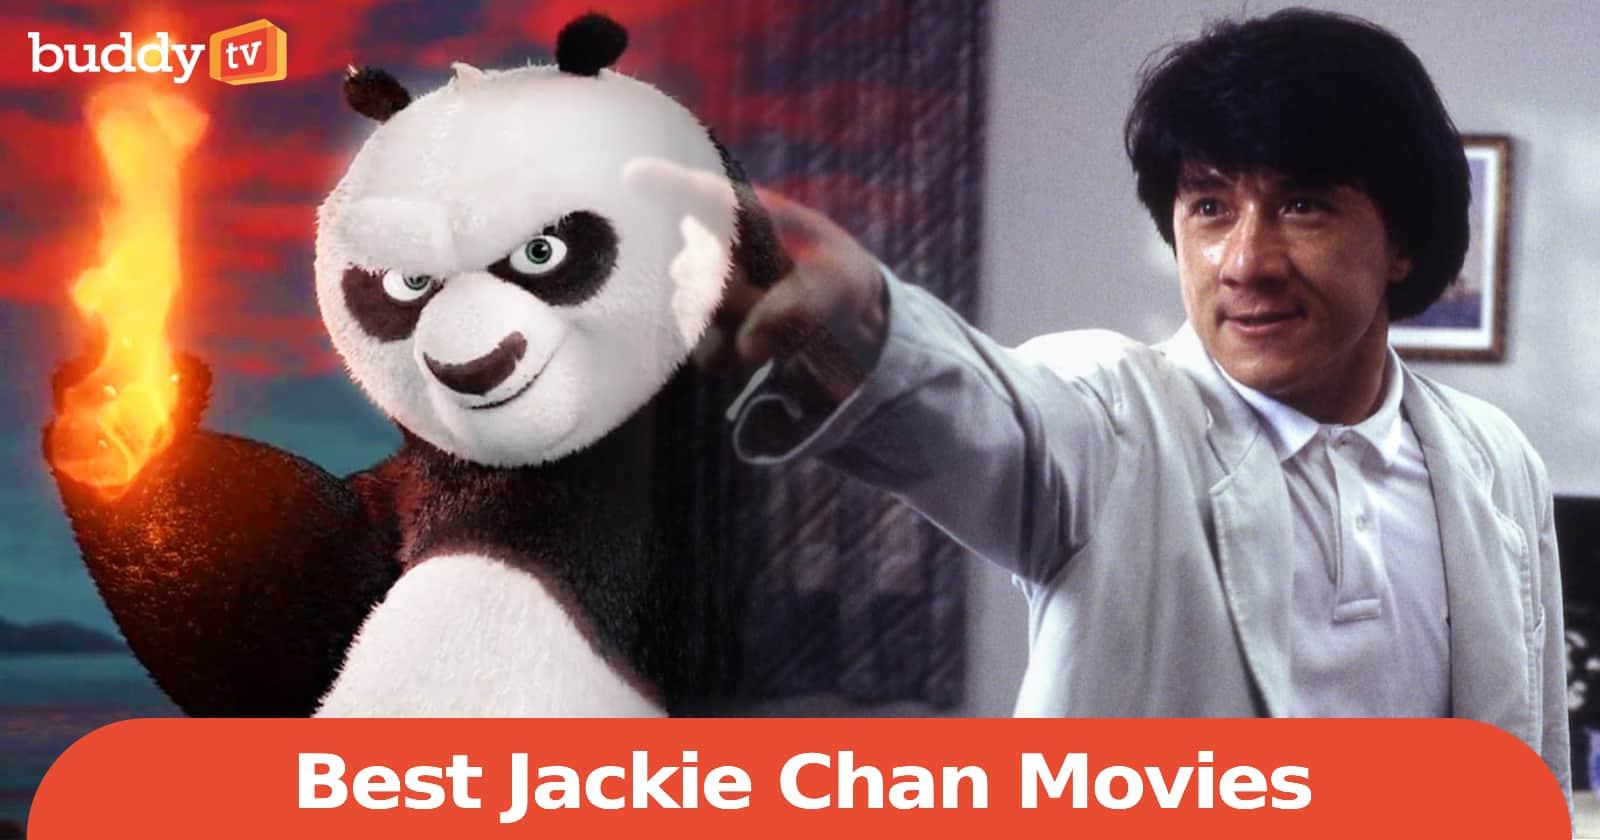 10 Best Jackie Chan Movies, Ranked by Viewers